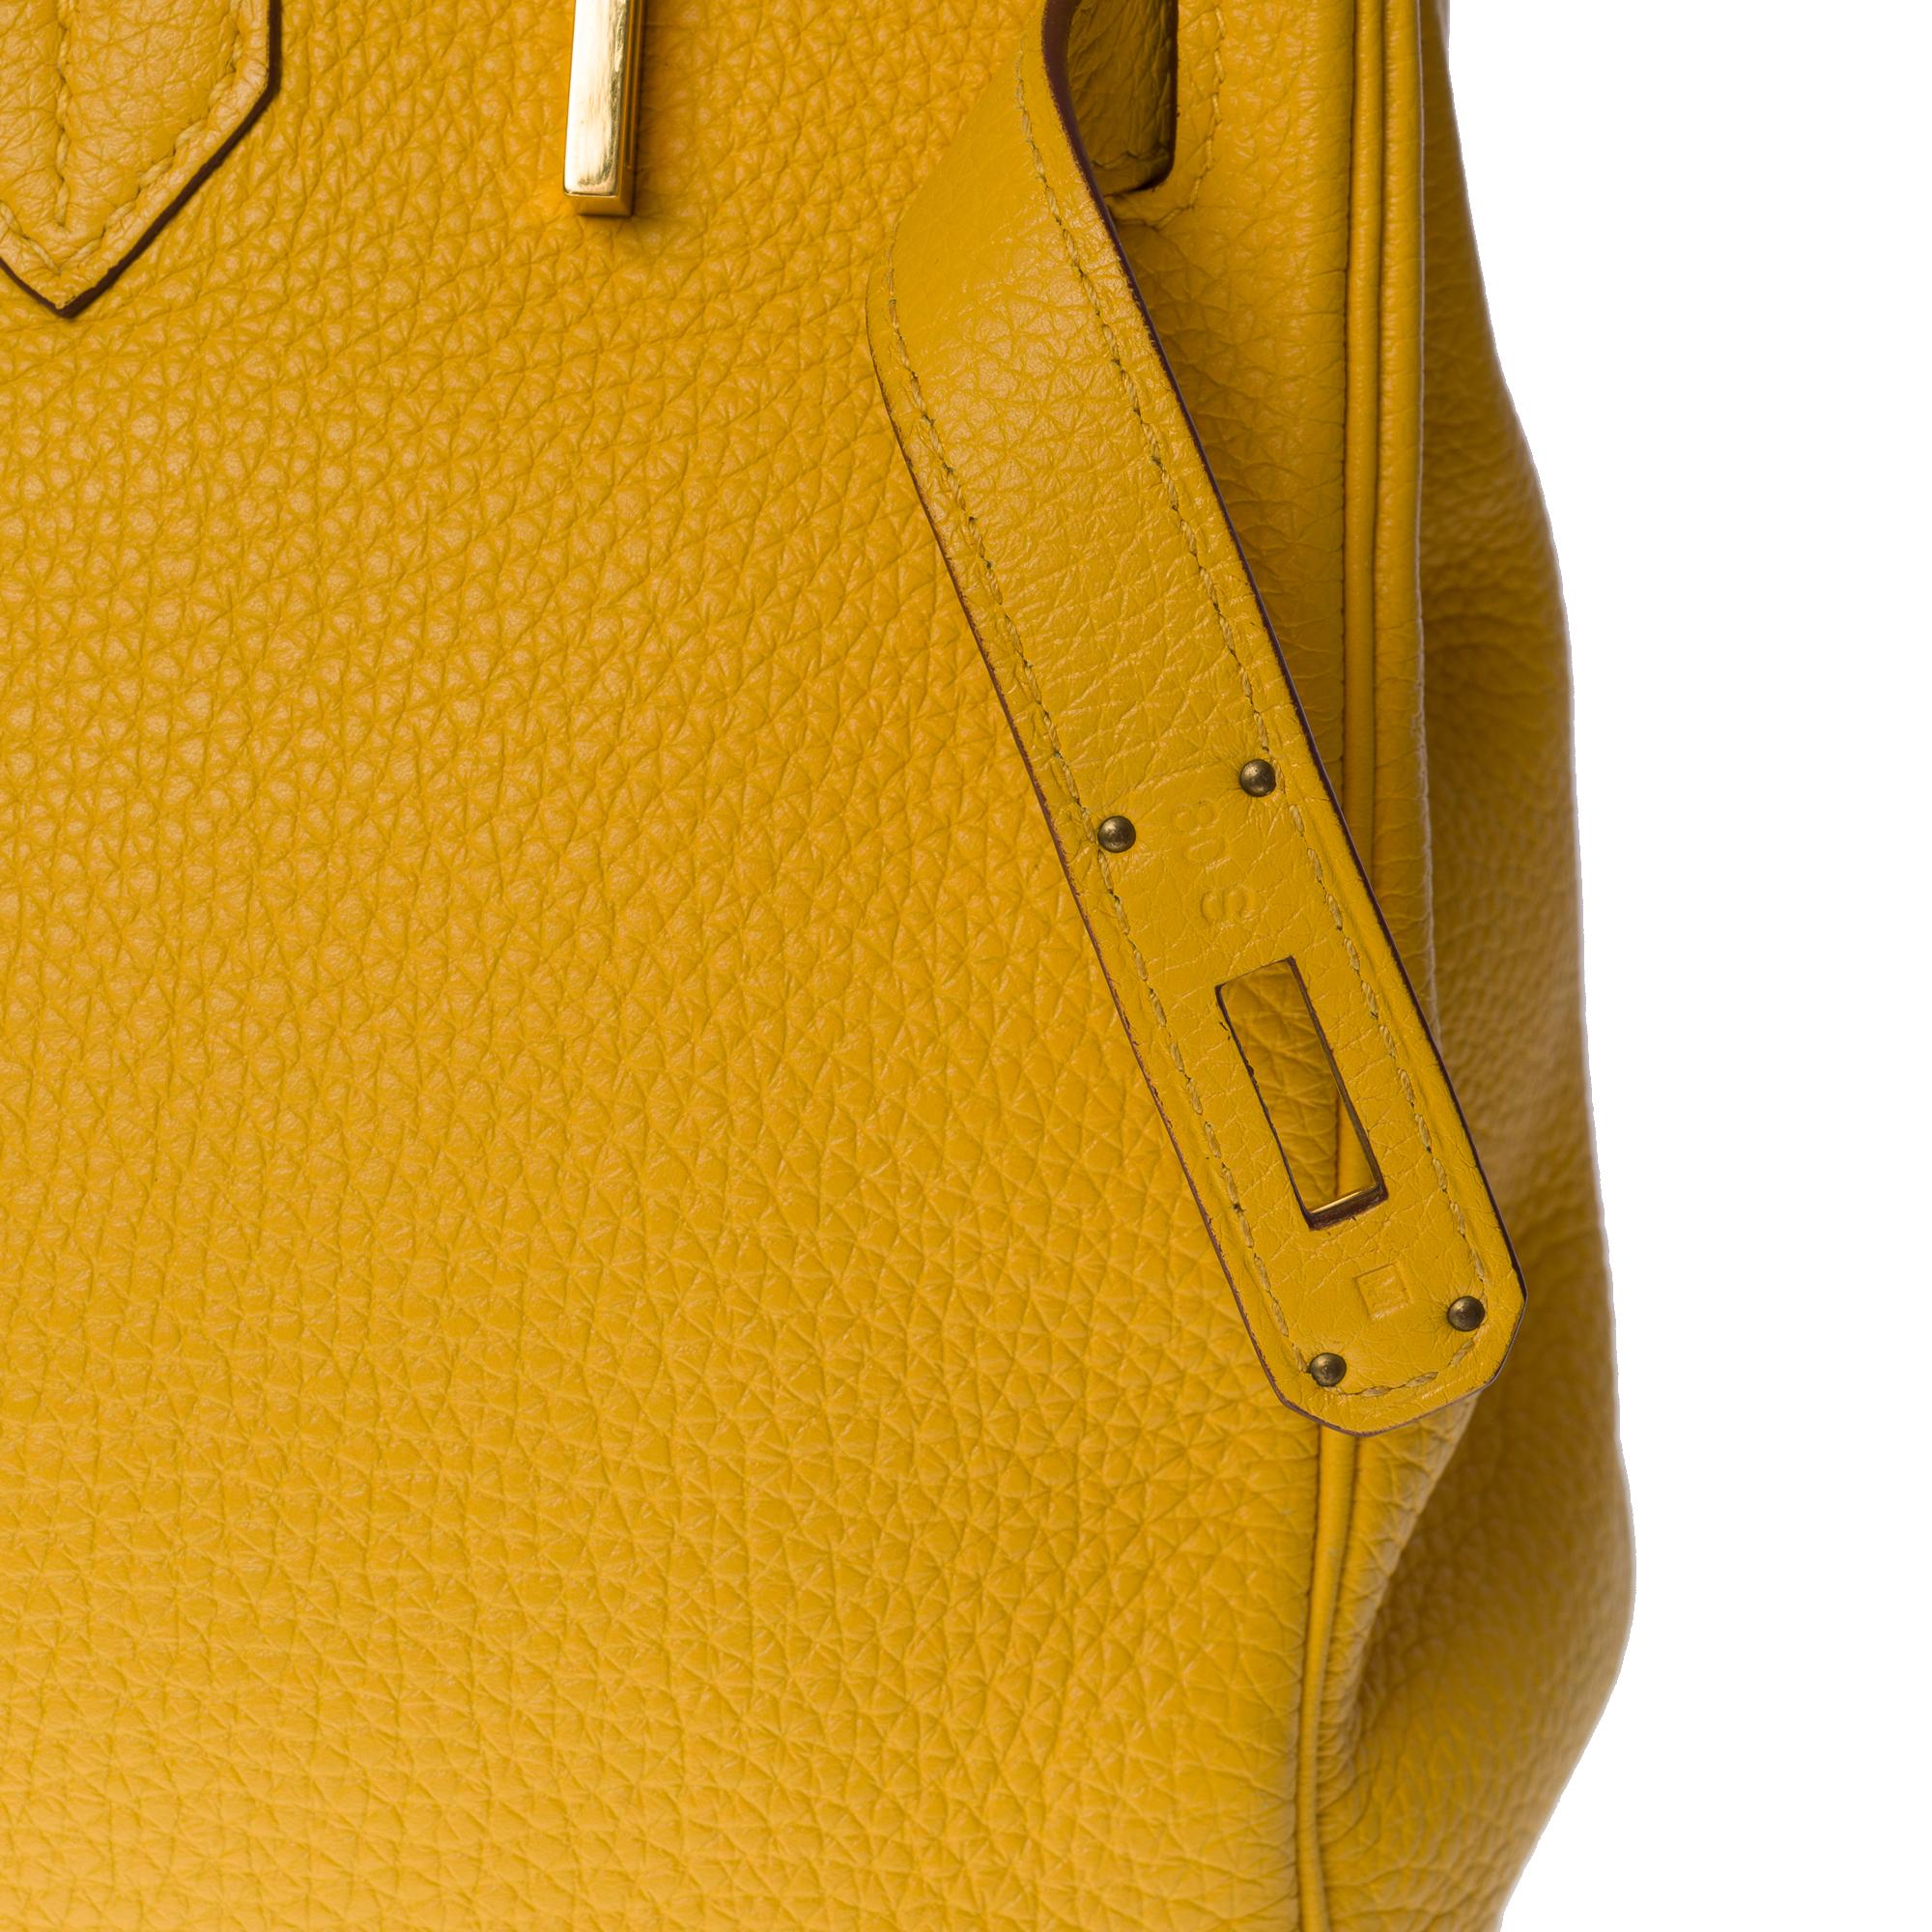 Amazing & Bright Hermès Birkin 30 handbag in Yellow Togo leather, GHW 3